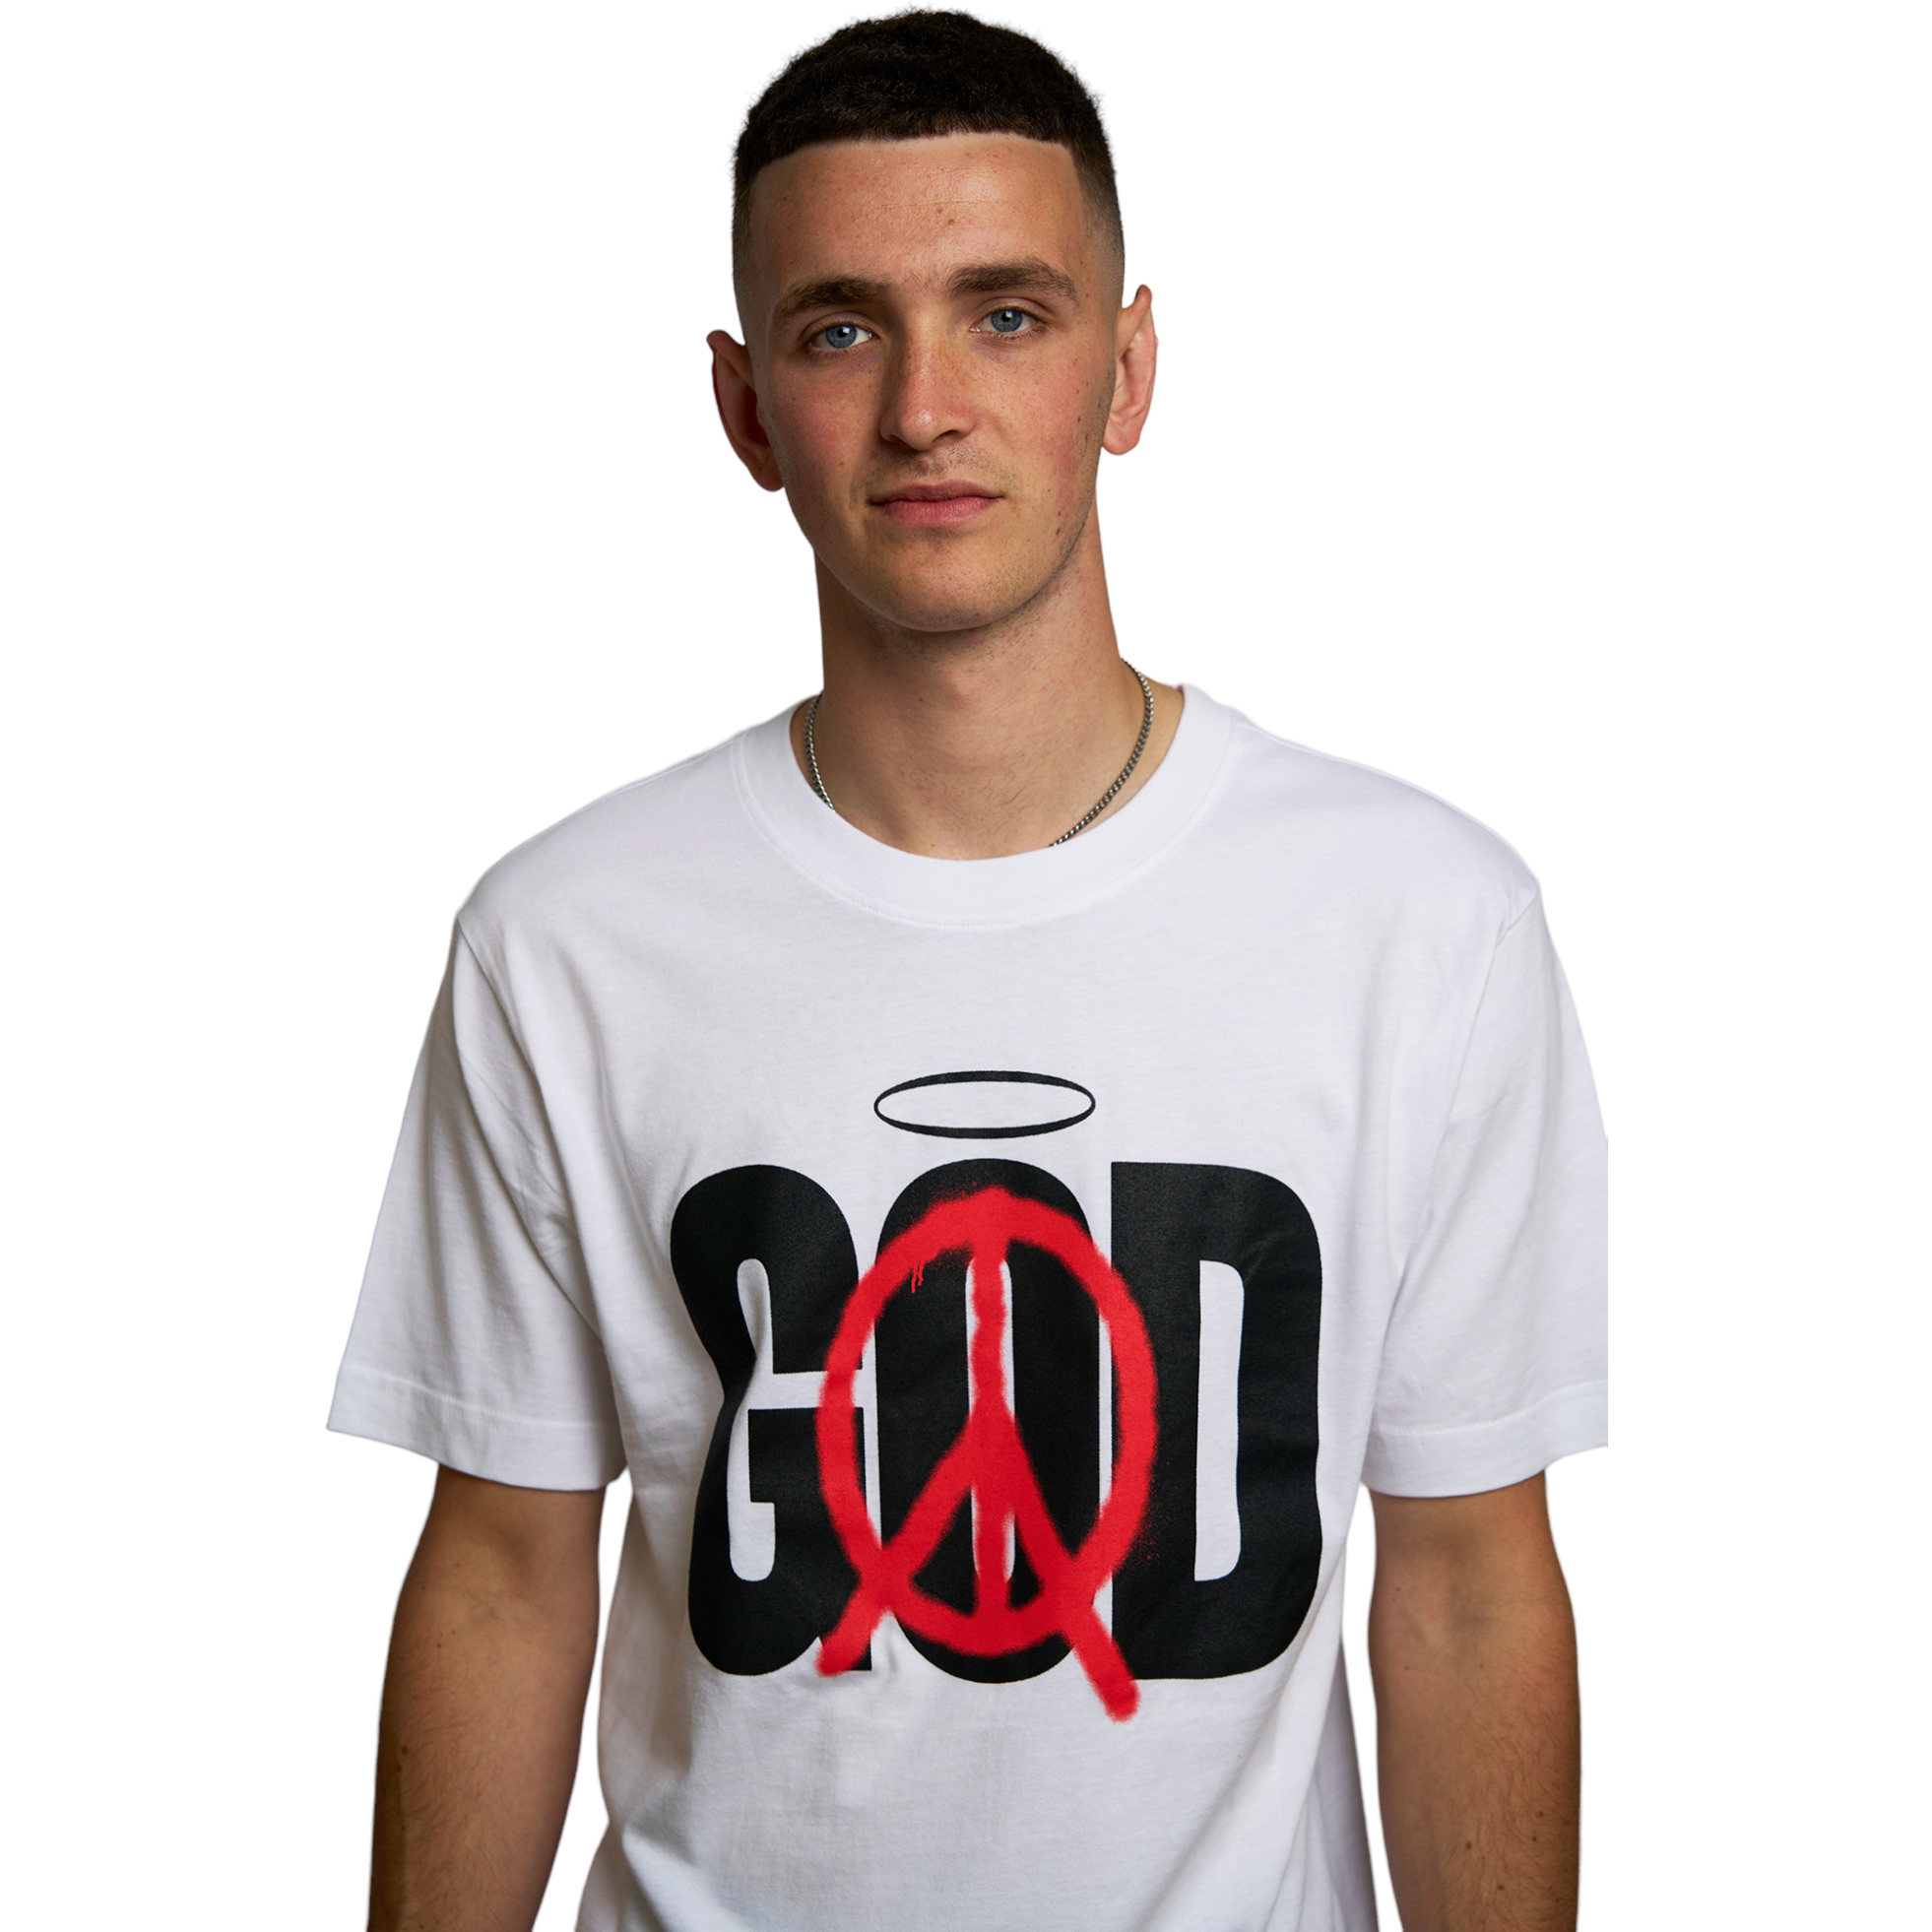 God Peace Logo T-Shirt